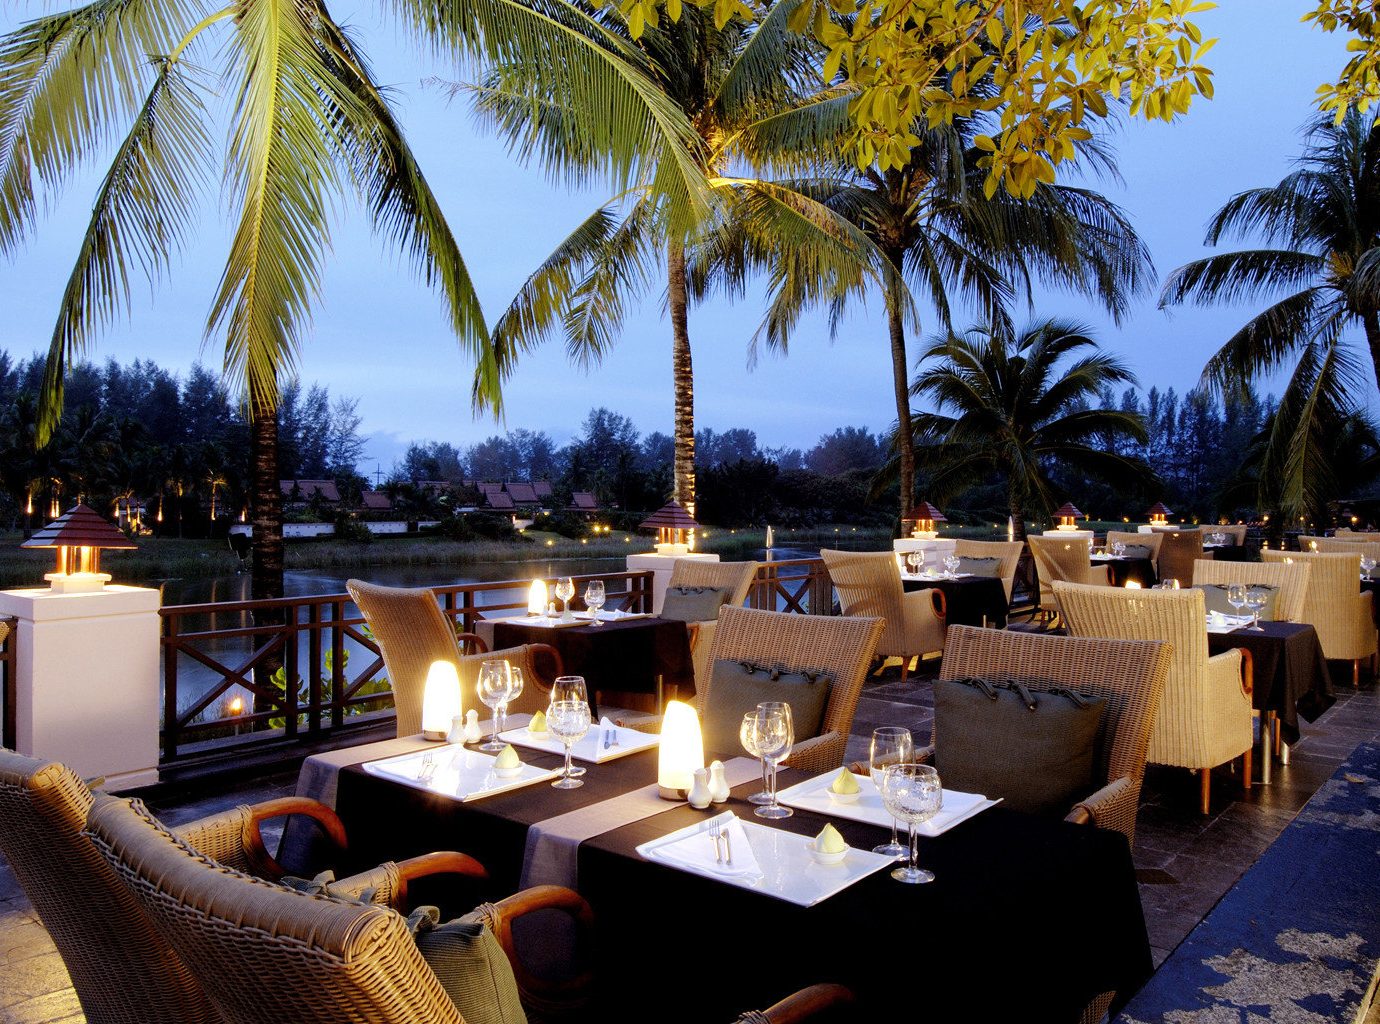 Beachfront Dining Drink Eat Honeymoon Hotels Luxury Romantic Wellness tree outdoor palm Resort restaurant estate meal